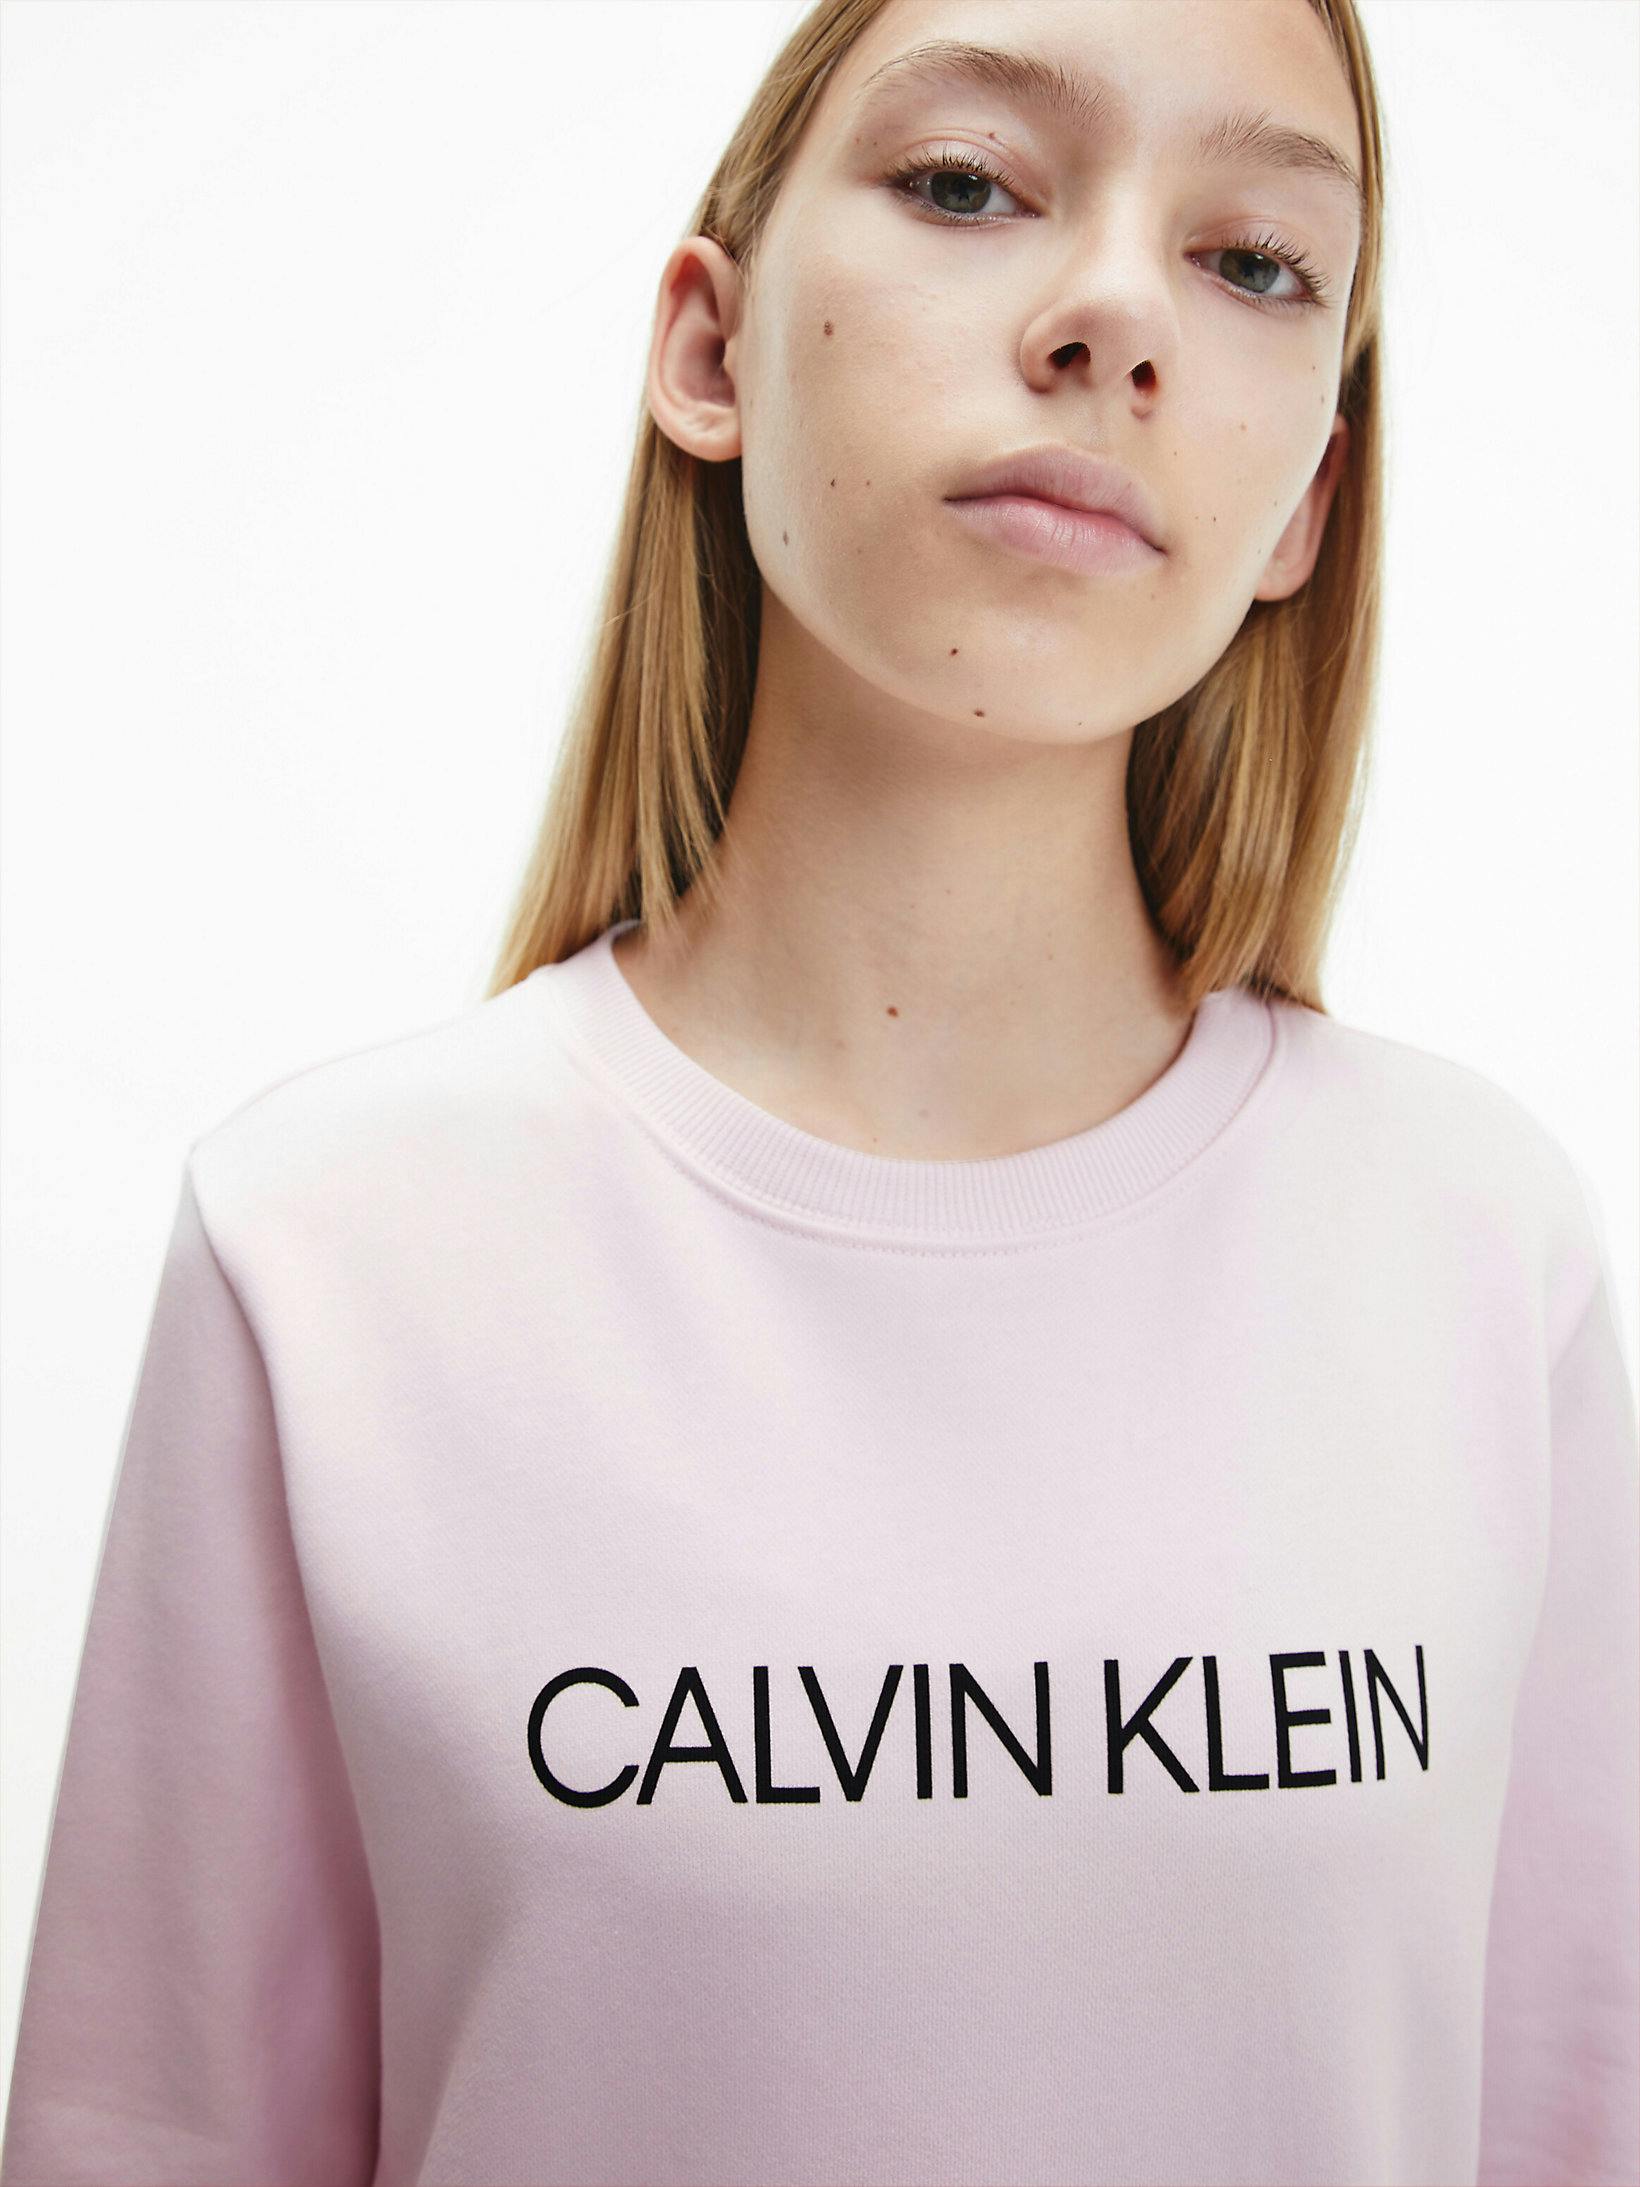 Kidz Management for Calvin Klein - Eliza publication photo #1